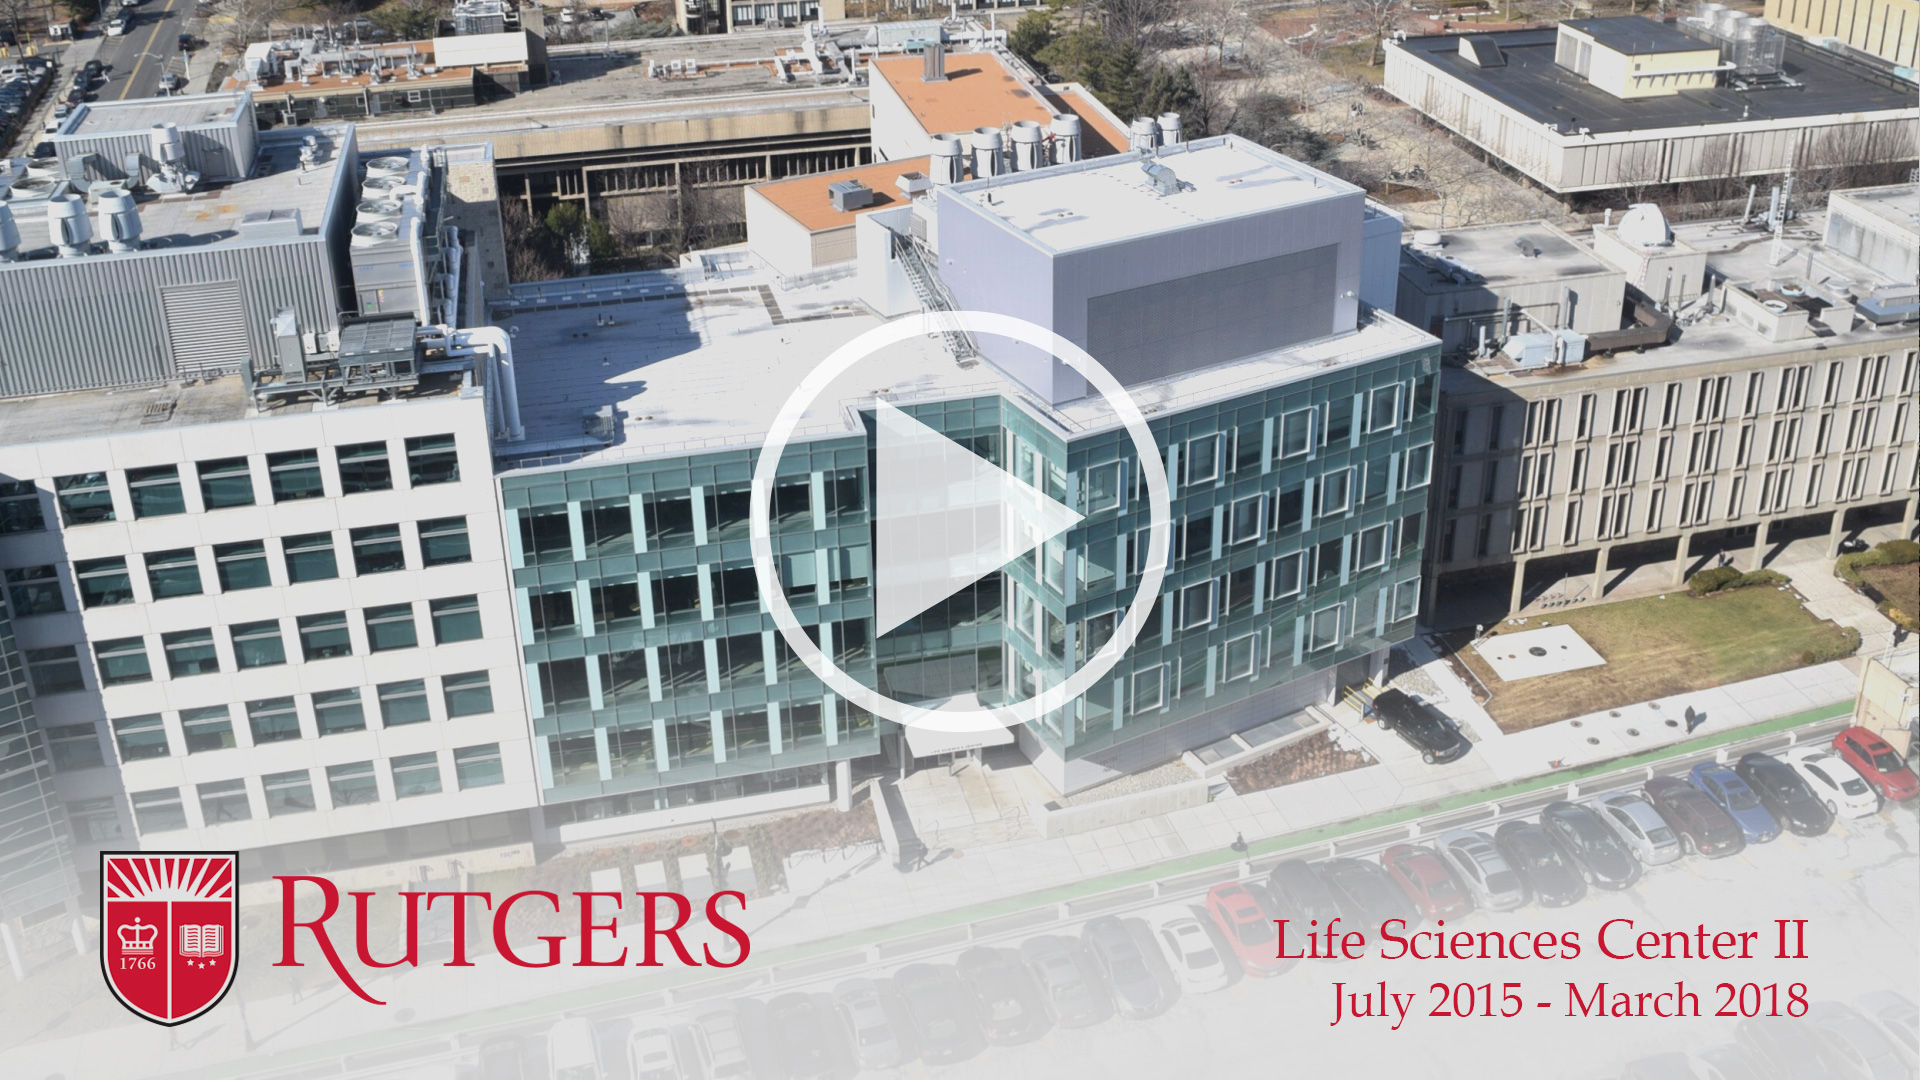 Rutgers University Life Sciences Center II